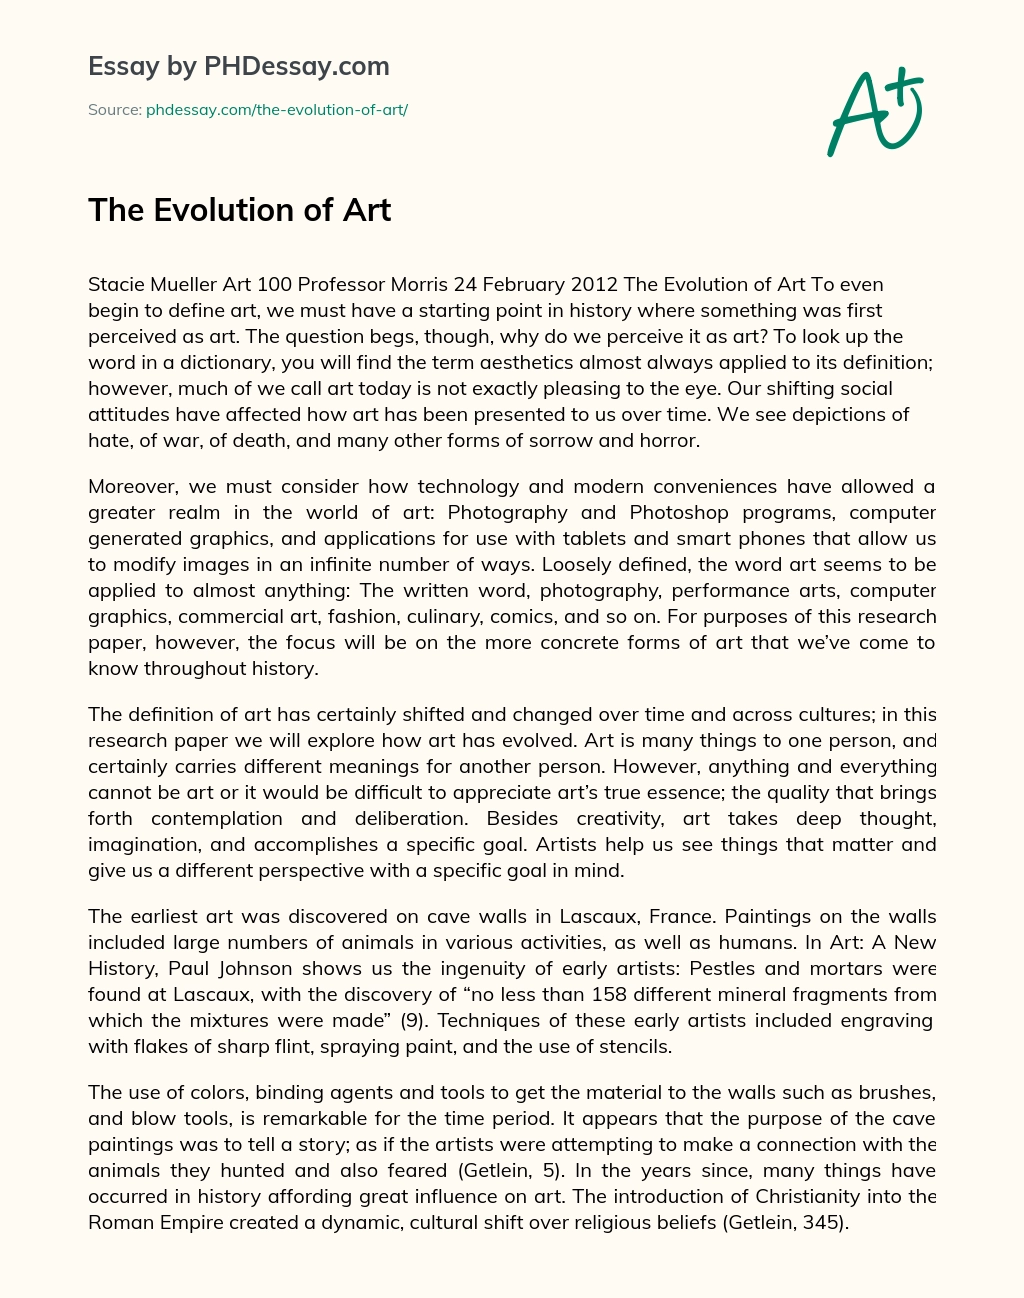 The Evolution of Art essay